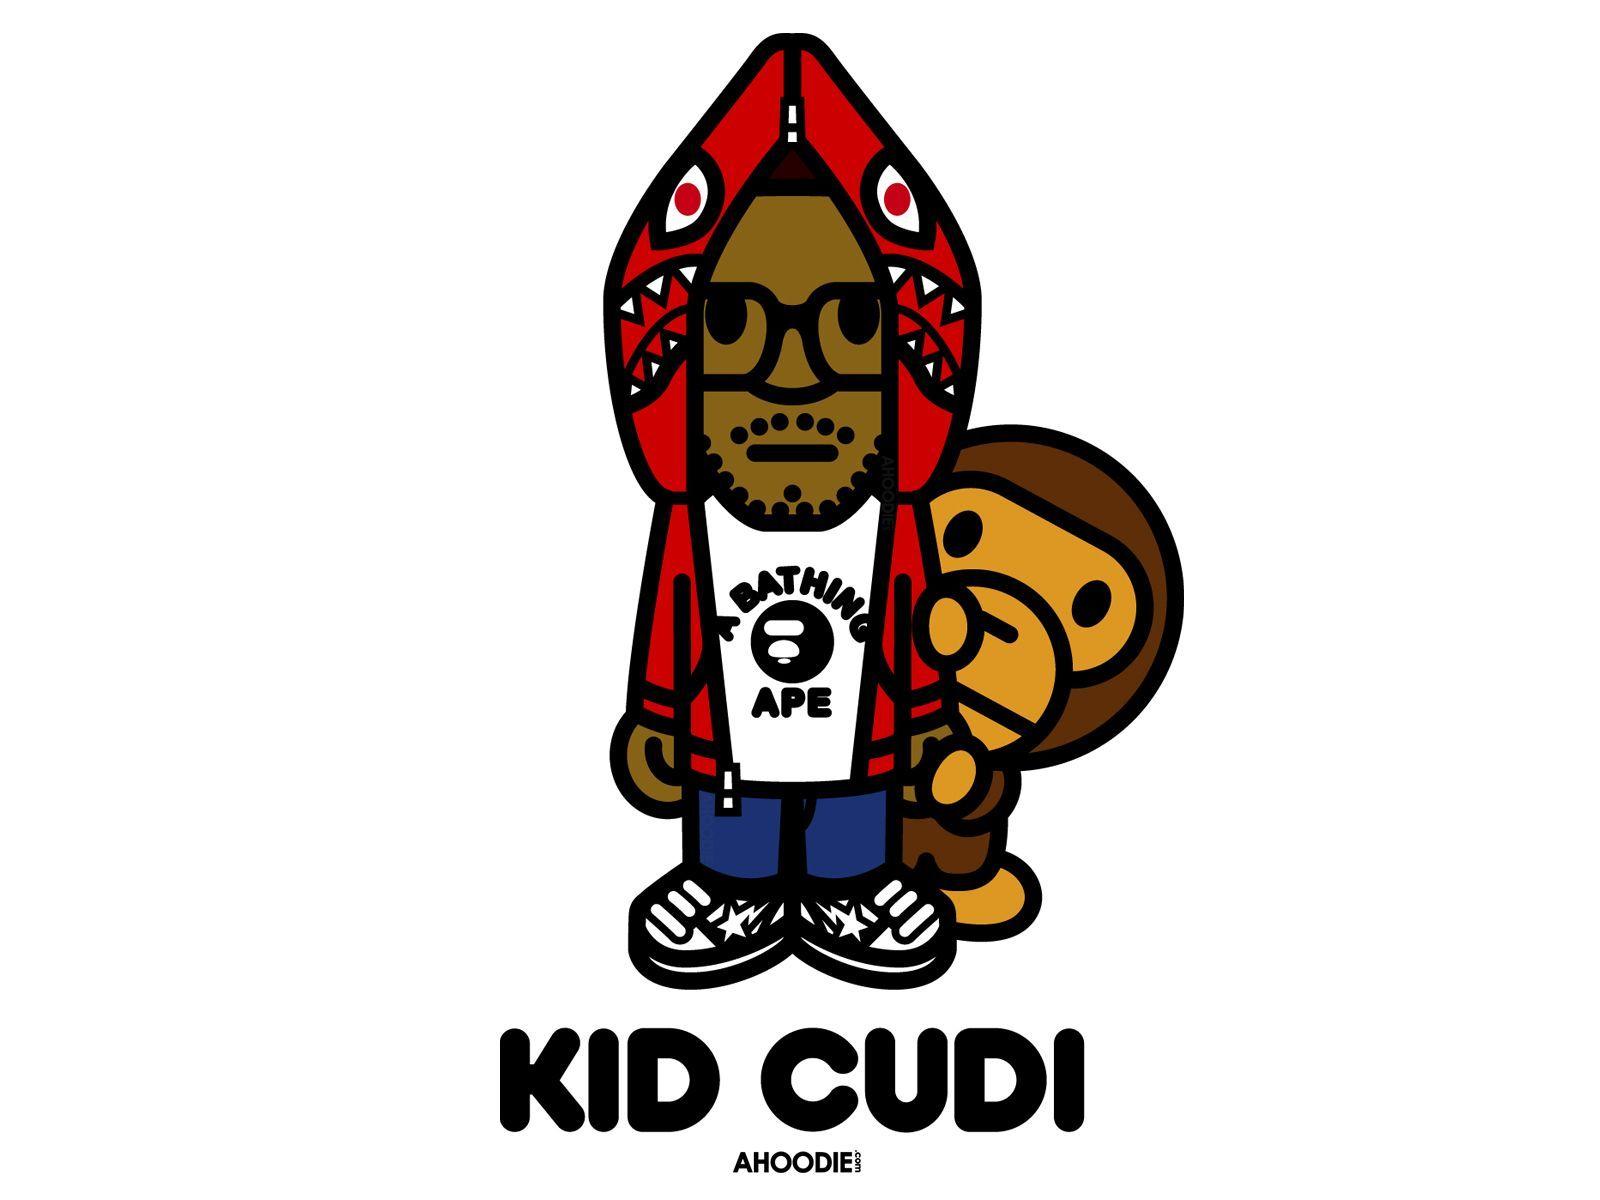 Cudi Logo - Kid Cudi is my favorite artist and Bape happens to be one of my